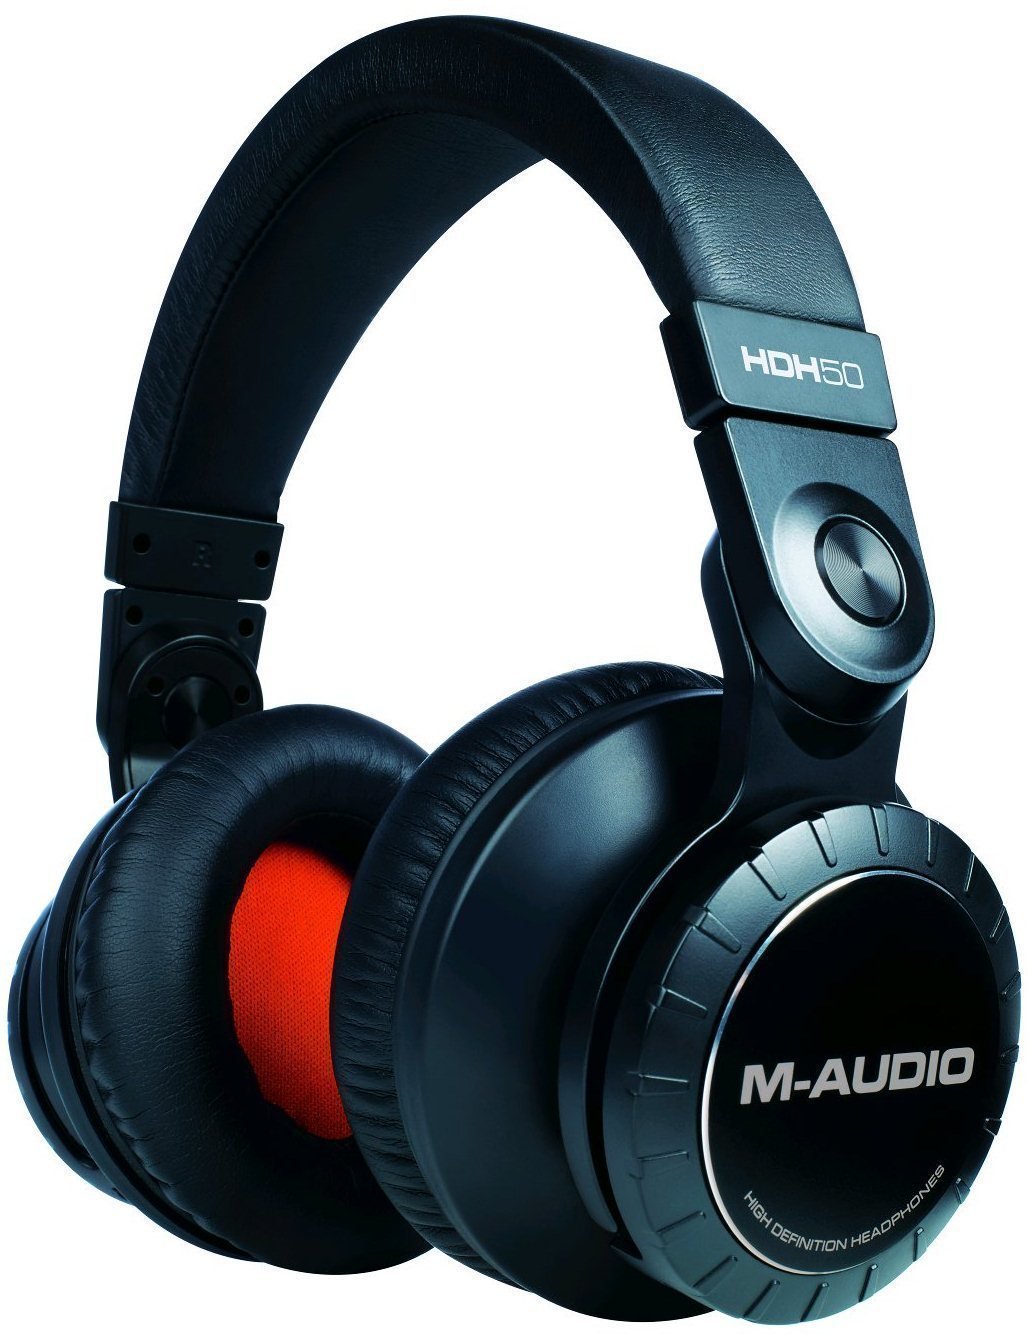 Štúdiová sluchátka M-Audio HDH50 High Definition Headphones